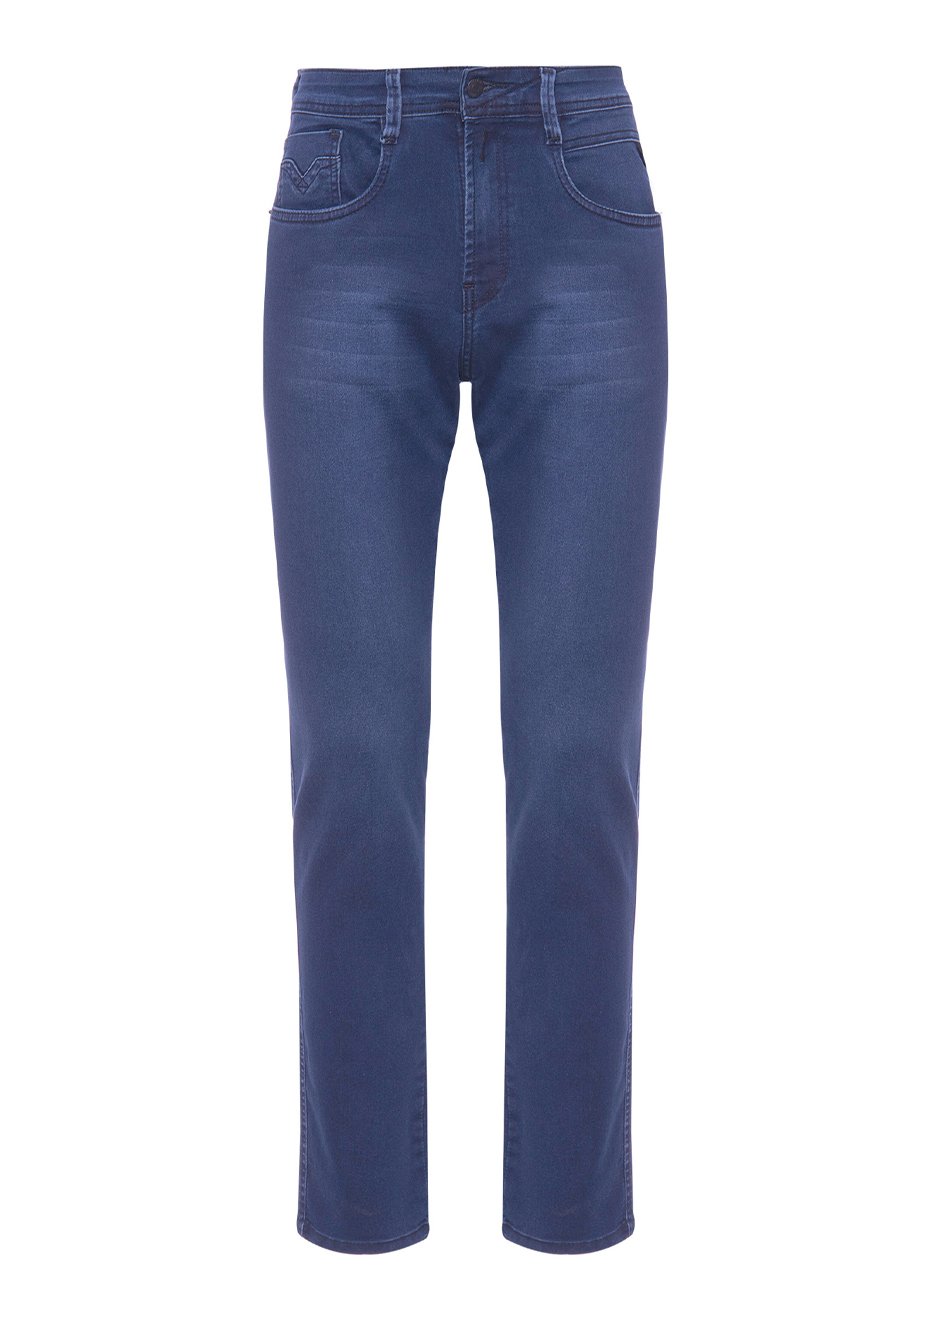 Calça Jeans Replay Masculina Anbass Azul Escuro